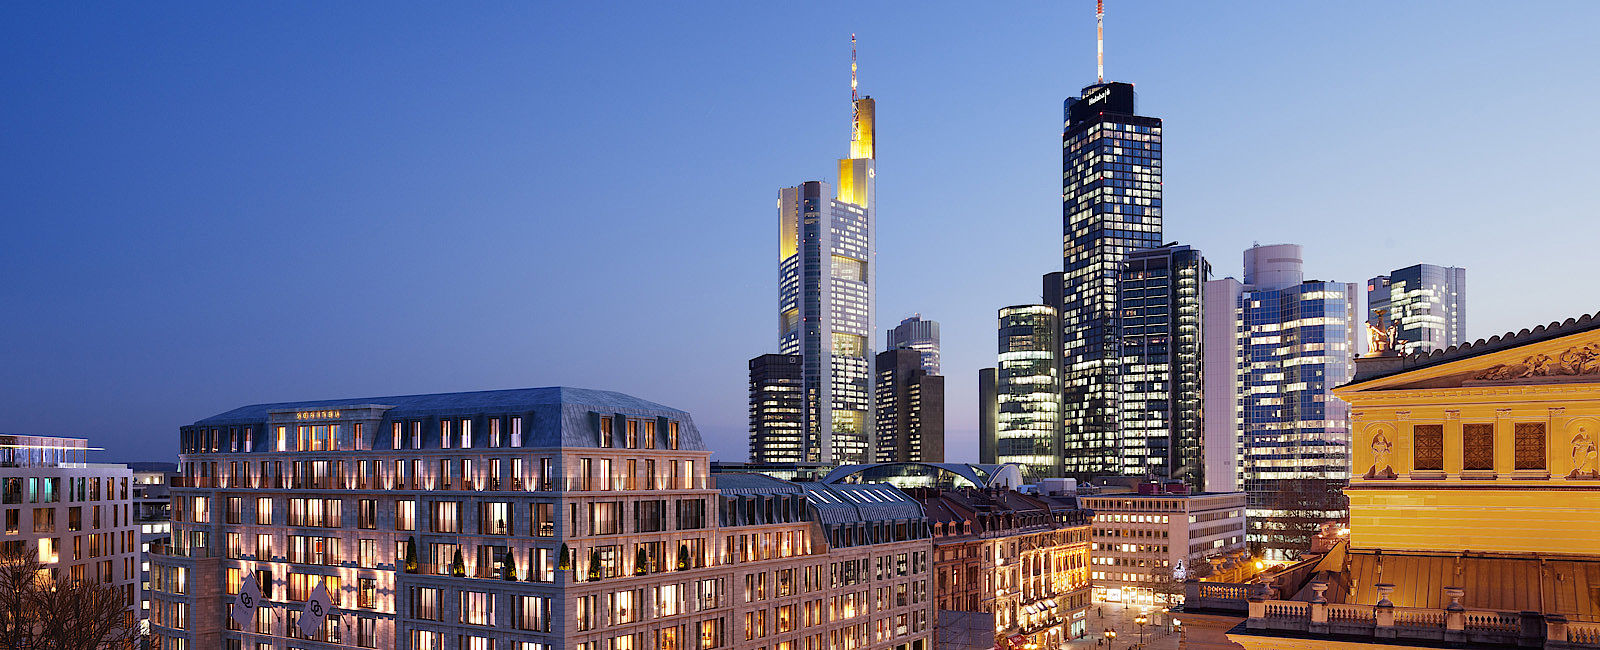 HOTELERÖFFNUNG NEWS
 Sofitel Frankfurt Opera: Neueröffnung am Main  
